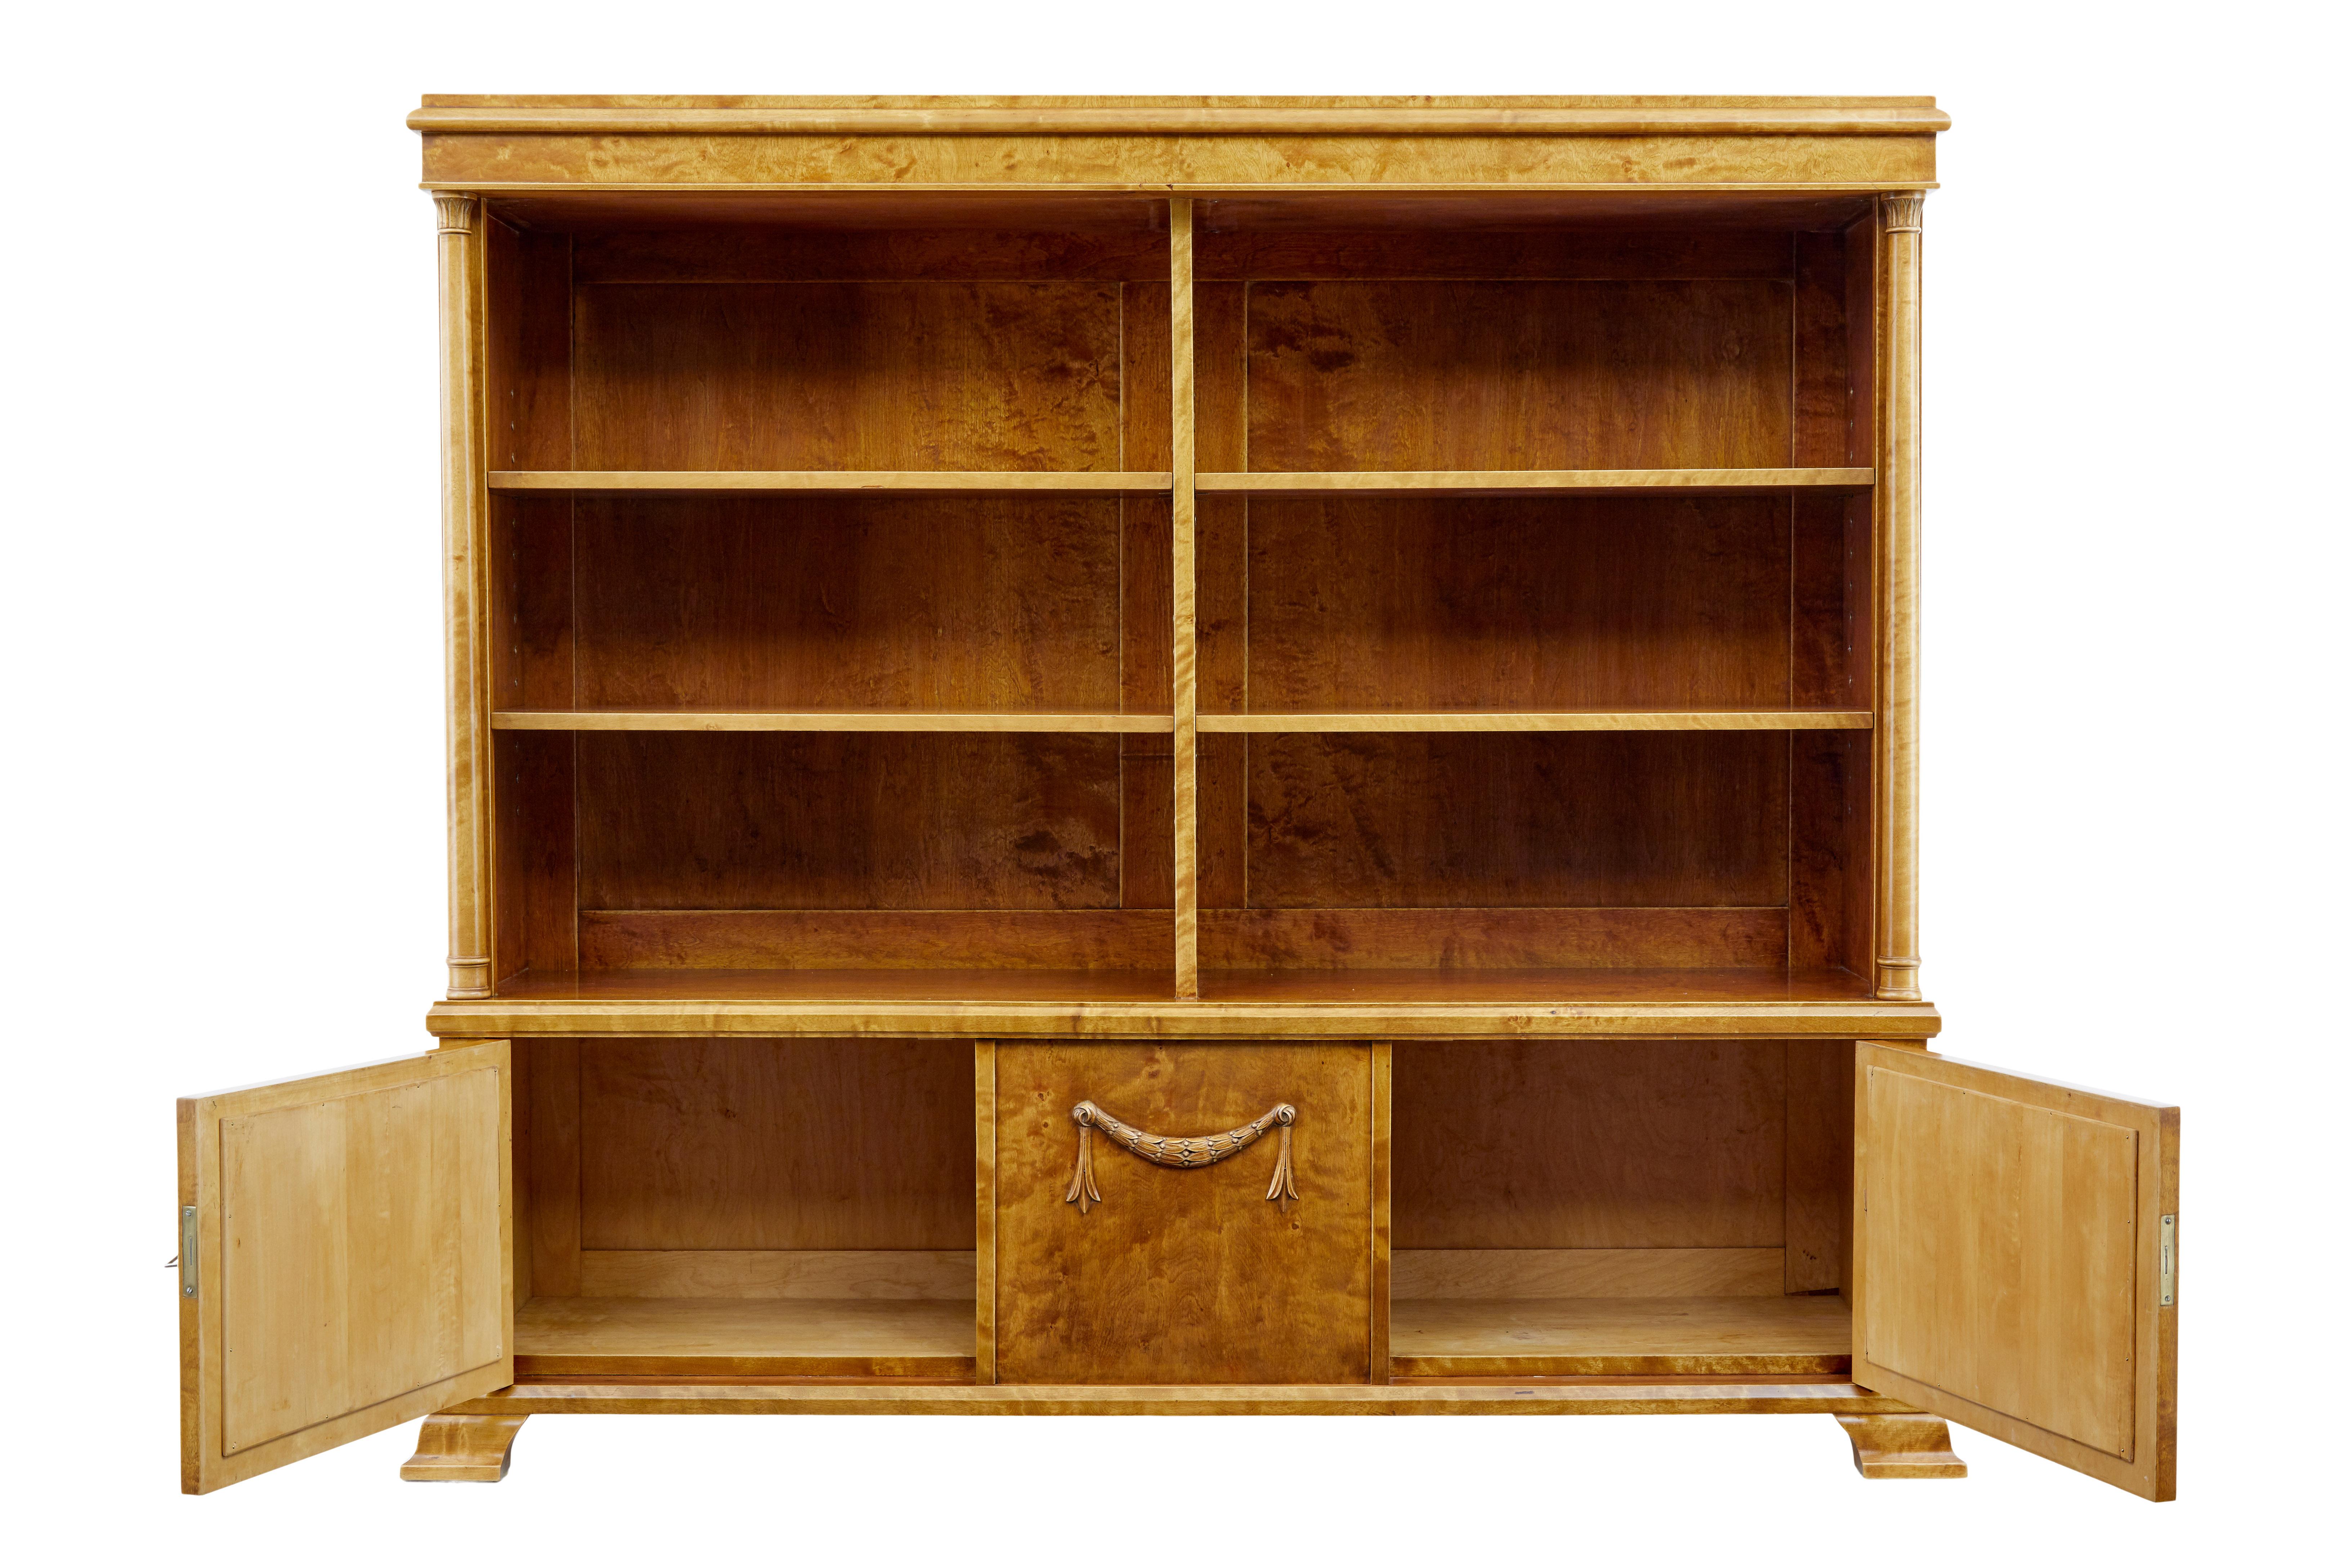 Empire Revival Early 20th century empire revival birch bookcase cabinet For Sale